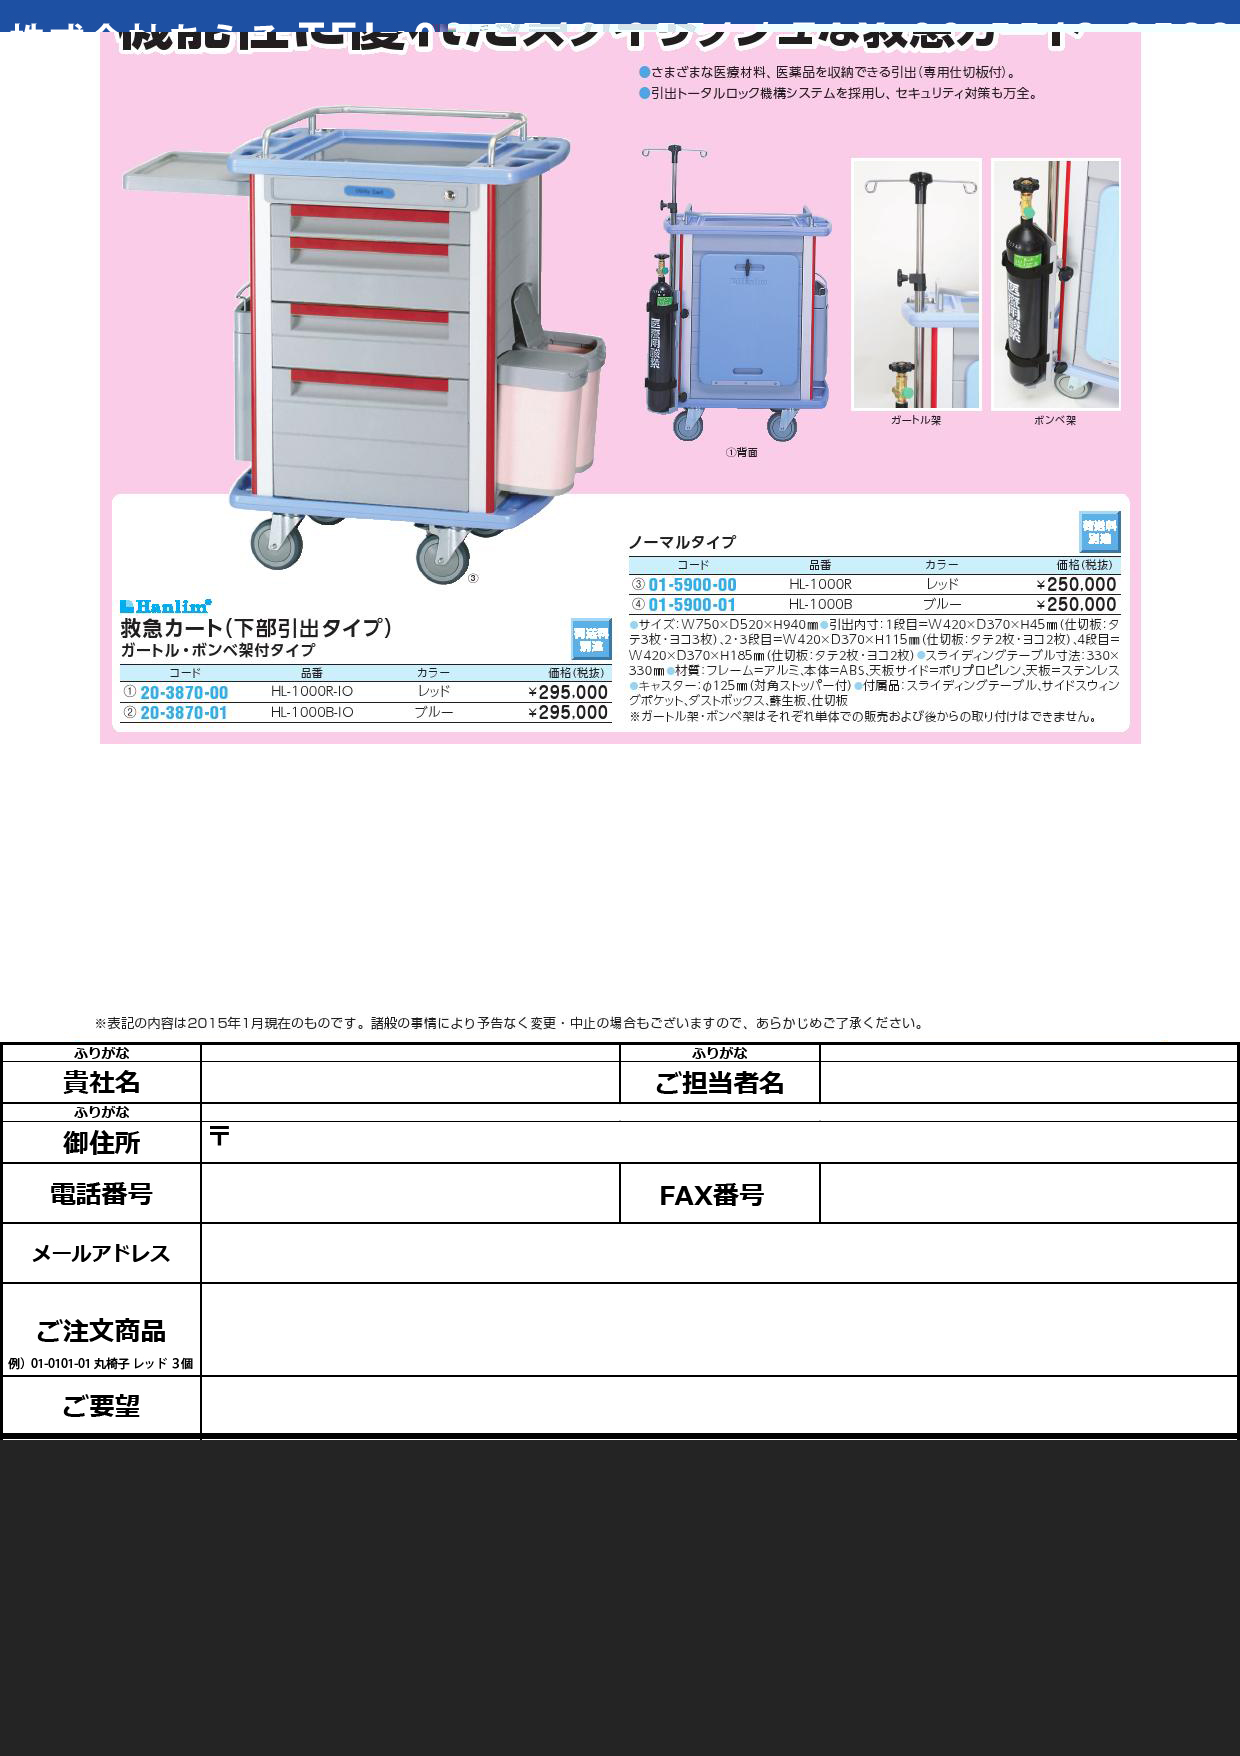 Ｈａｎｌｉｍ 救急カート ﾊﾝﾘﾑｷｭｳｷｭｳｶｰﾄ(01-5900-00)HL-1000R(ﾚｯﾄﾞ)【1台単位】【2015年カタログ商品】